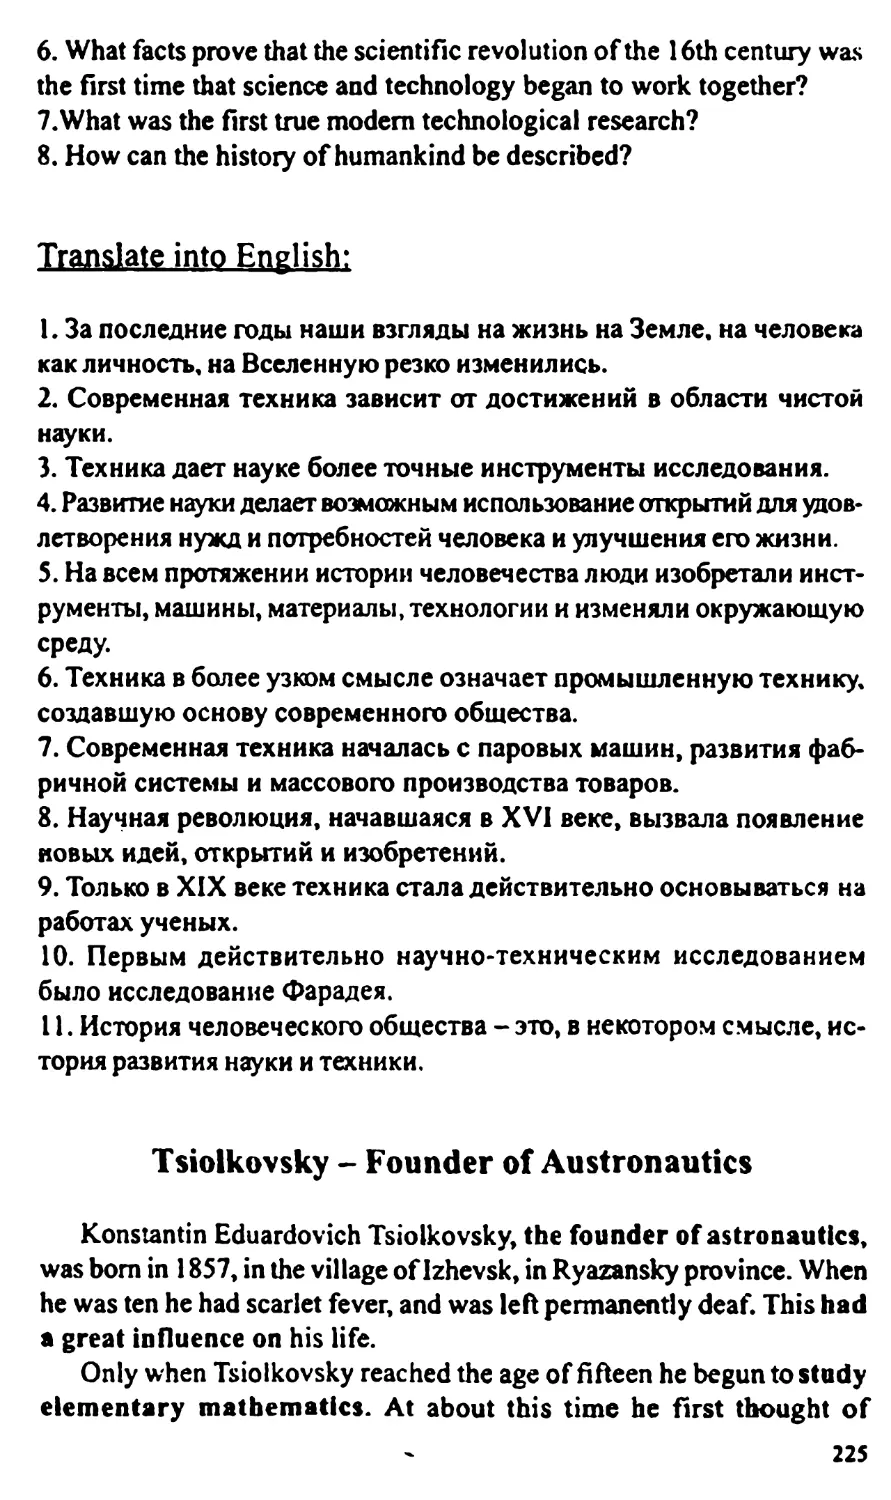 Tsiolkovsky - Founder of Austronautics